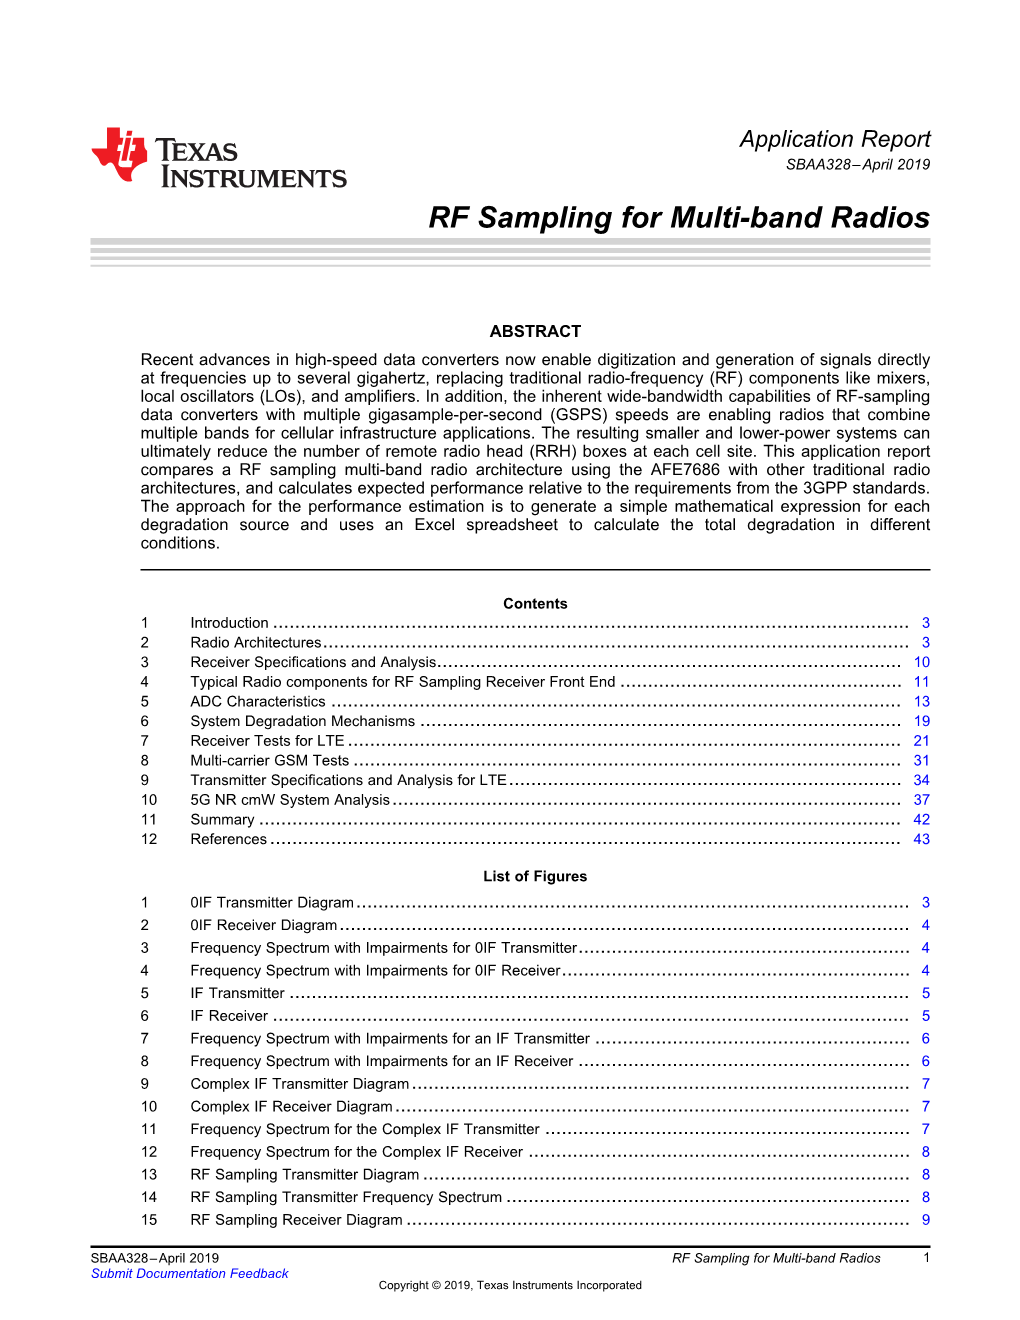 RF Sampling for Multi-Band Radios